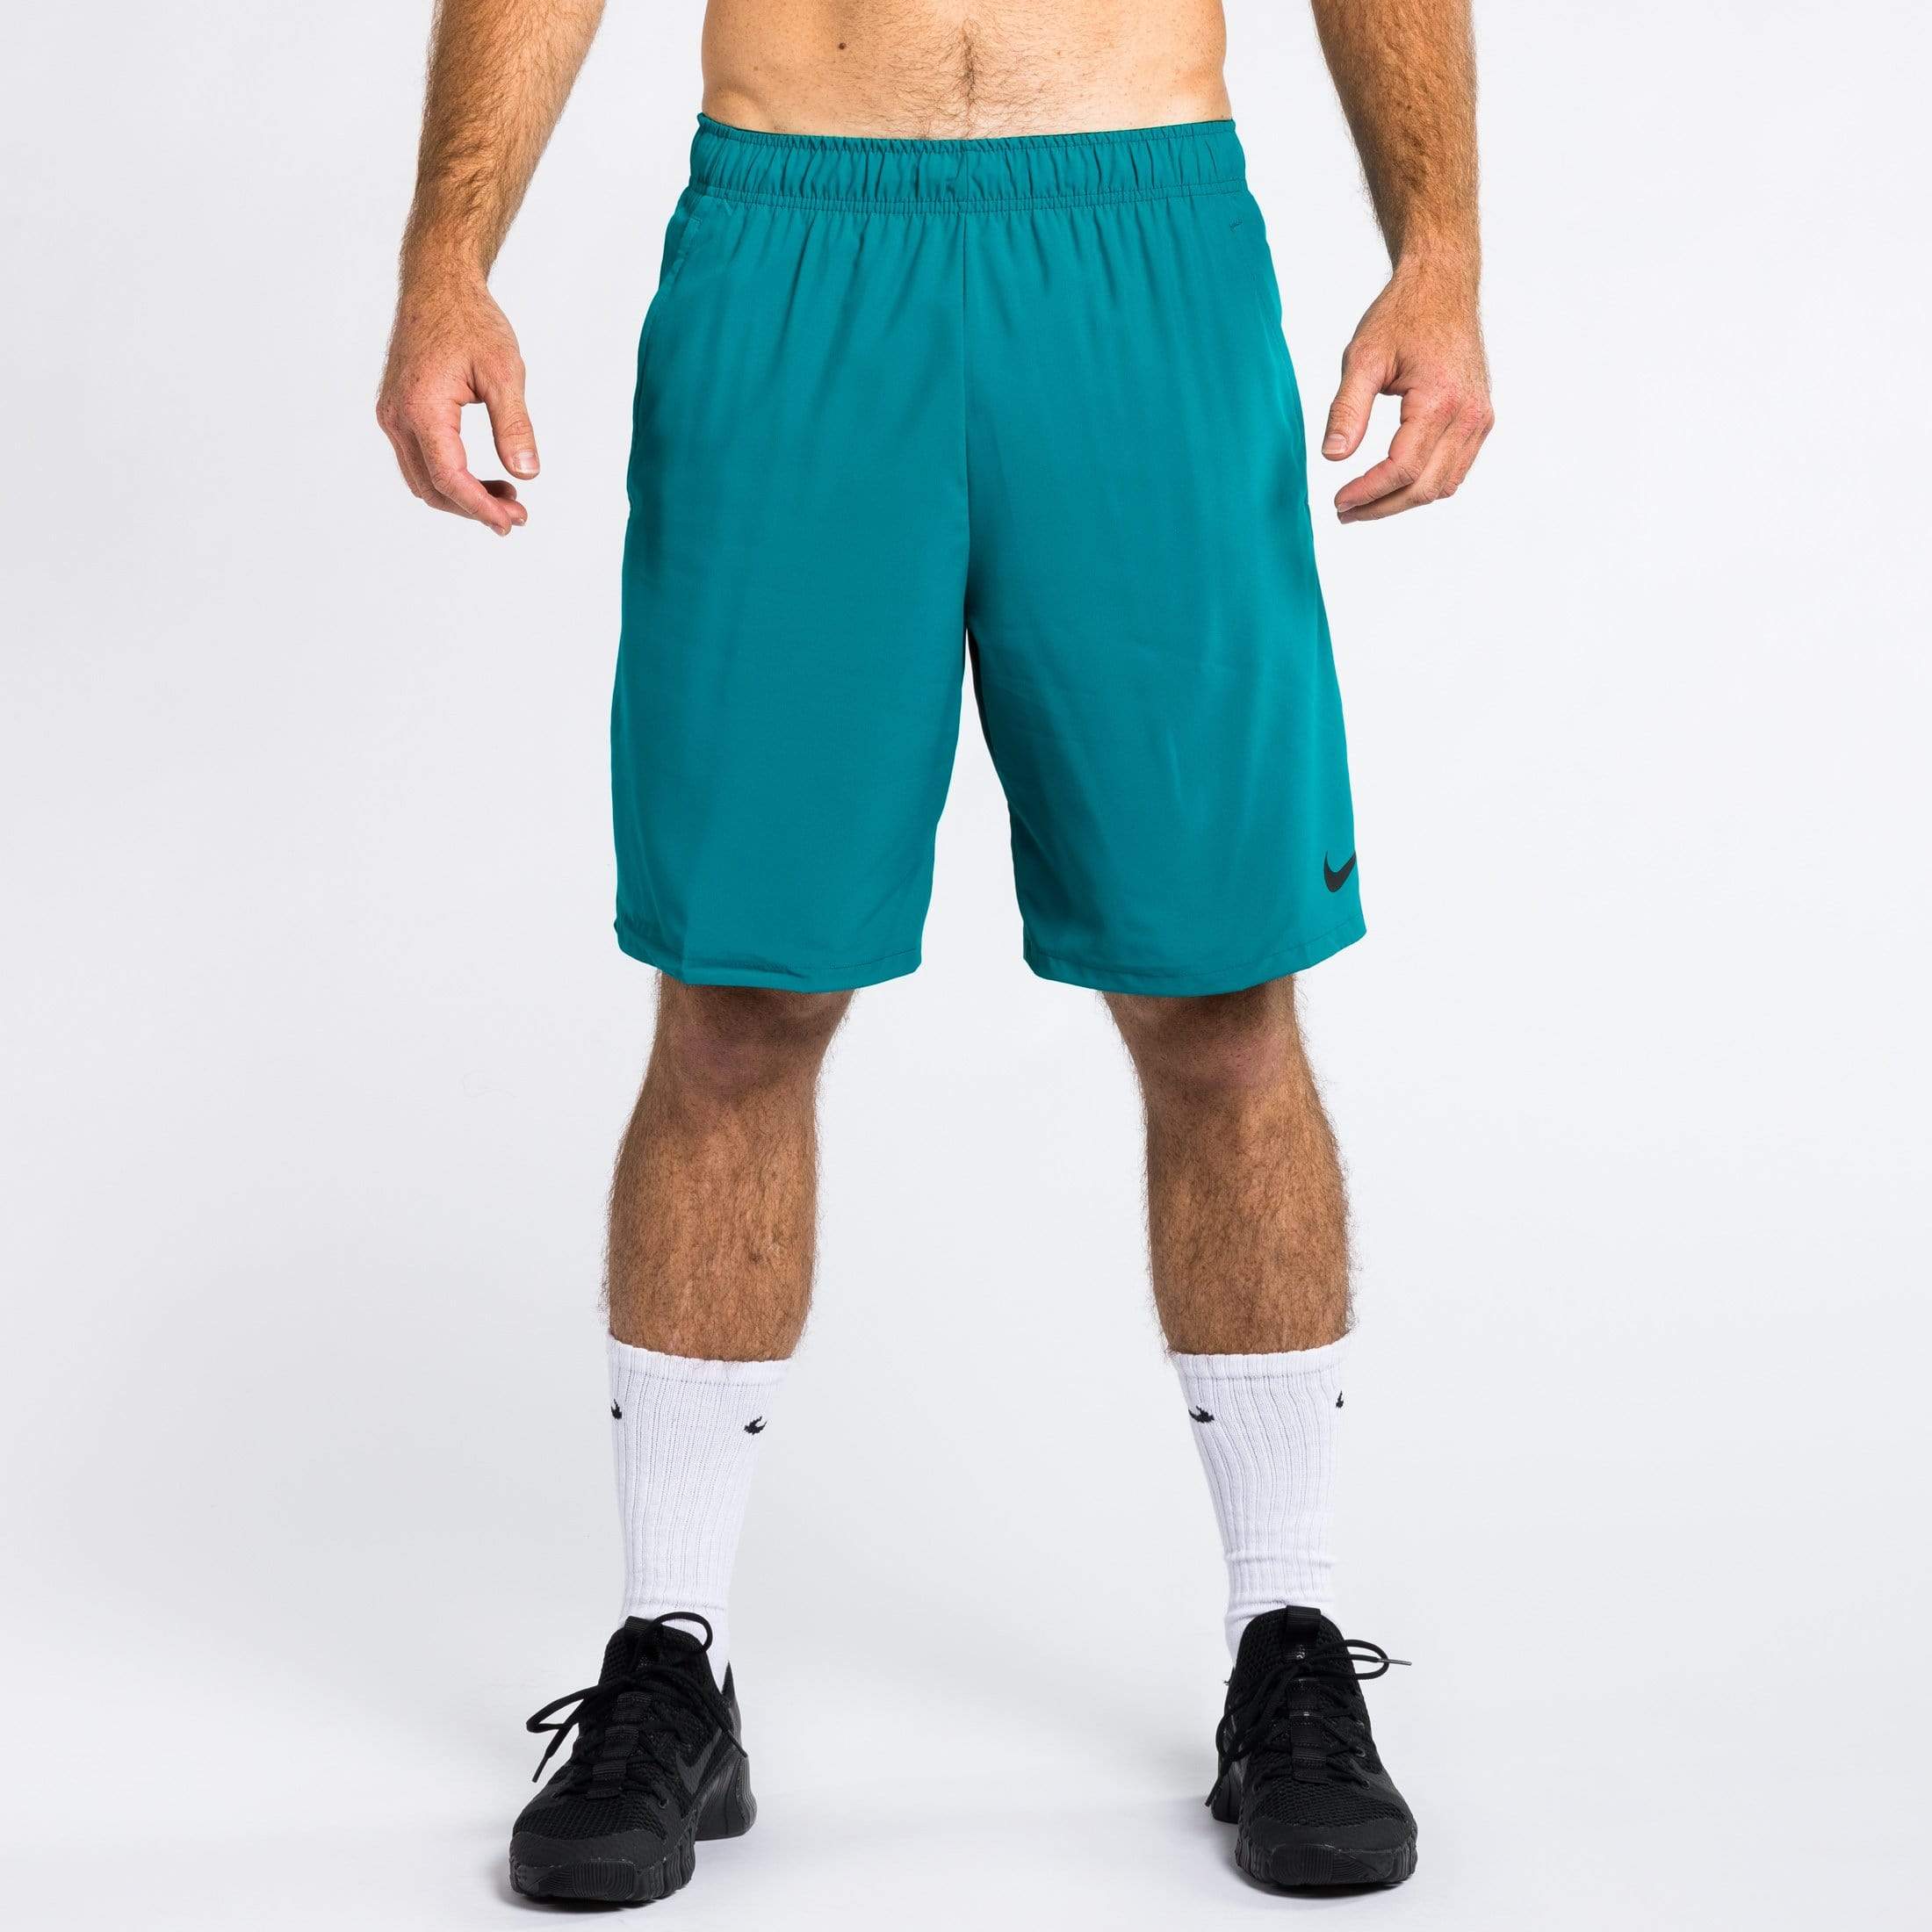 nike flex 8 shorts